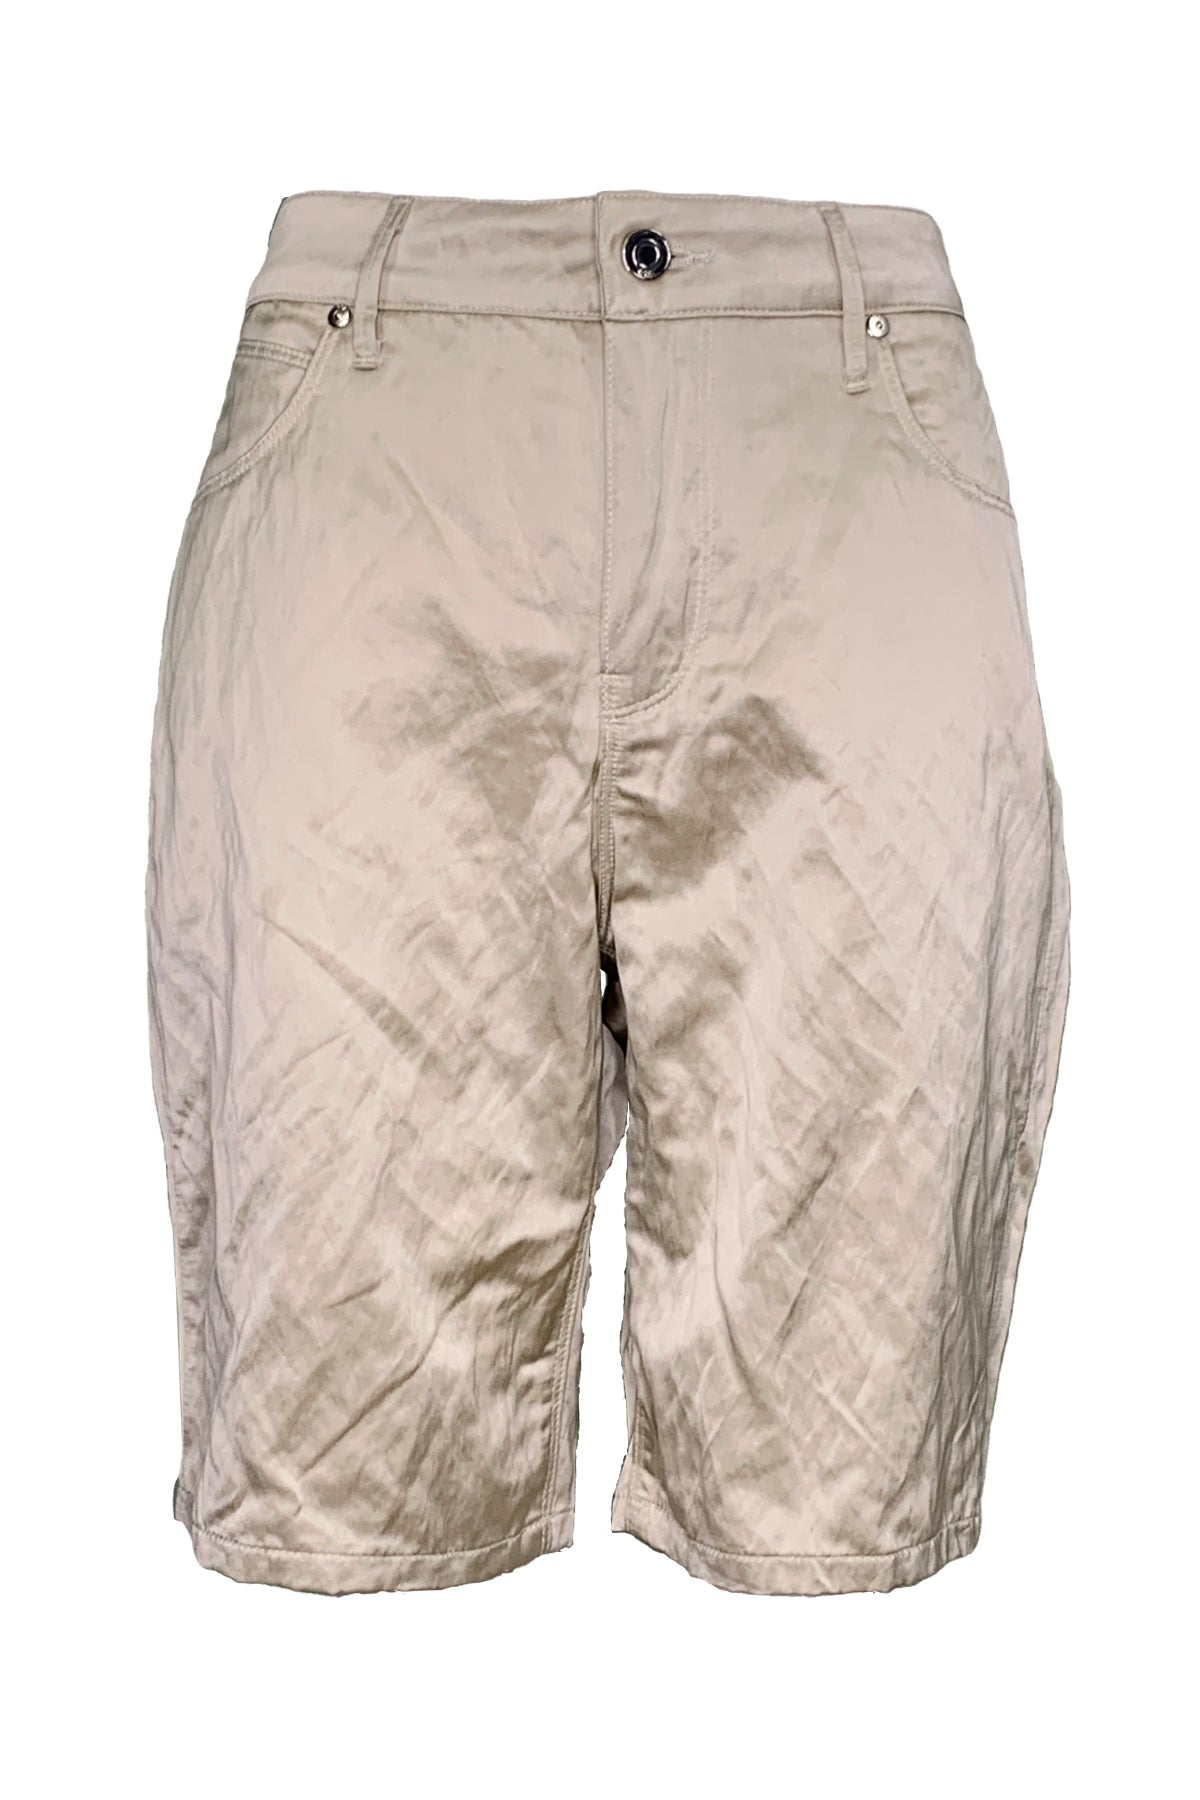 Jami Shorts in Ivory Shine - shop-olivia.com